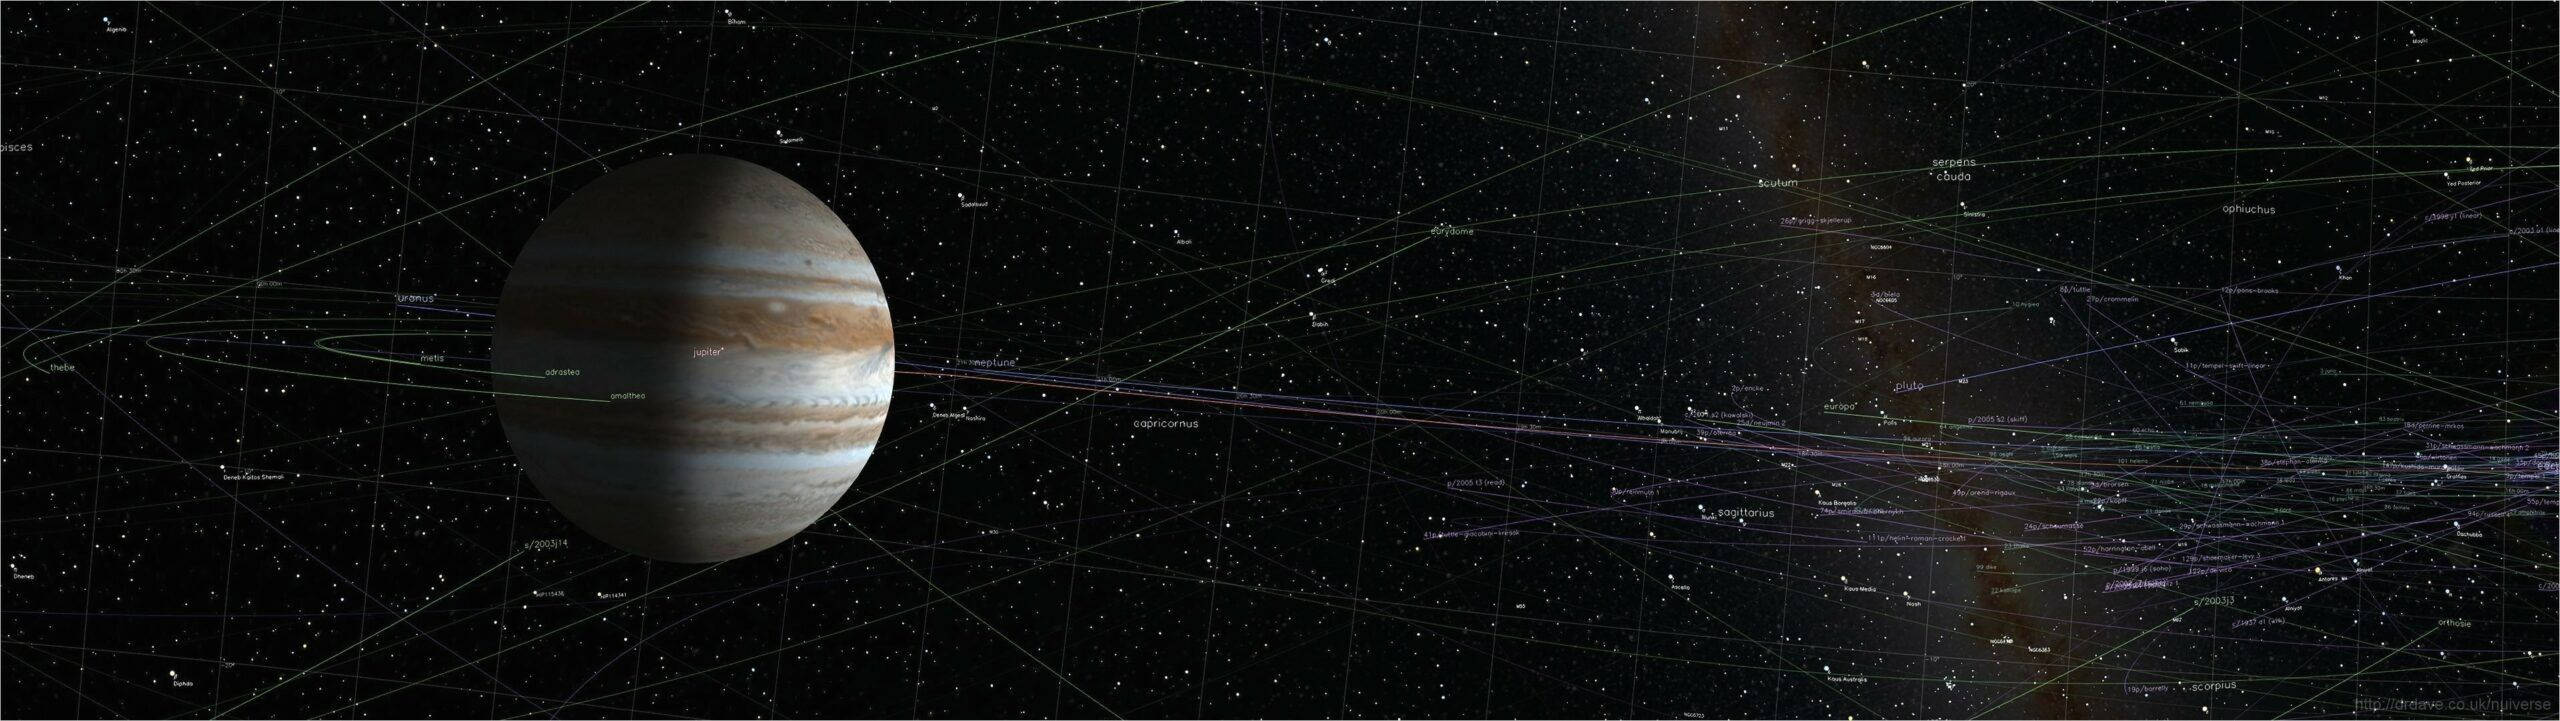 4K Dual Monitor Jupiter And Constellations Wallpaper